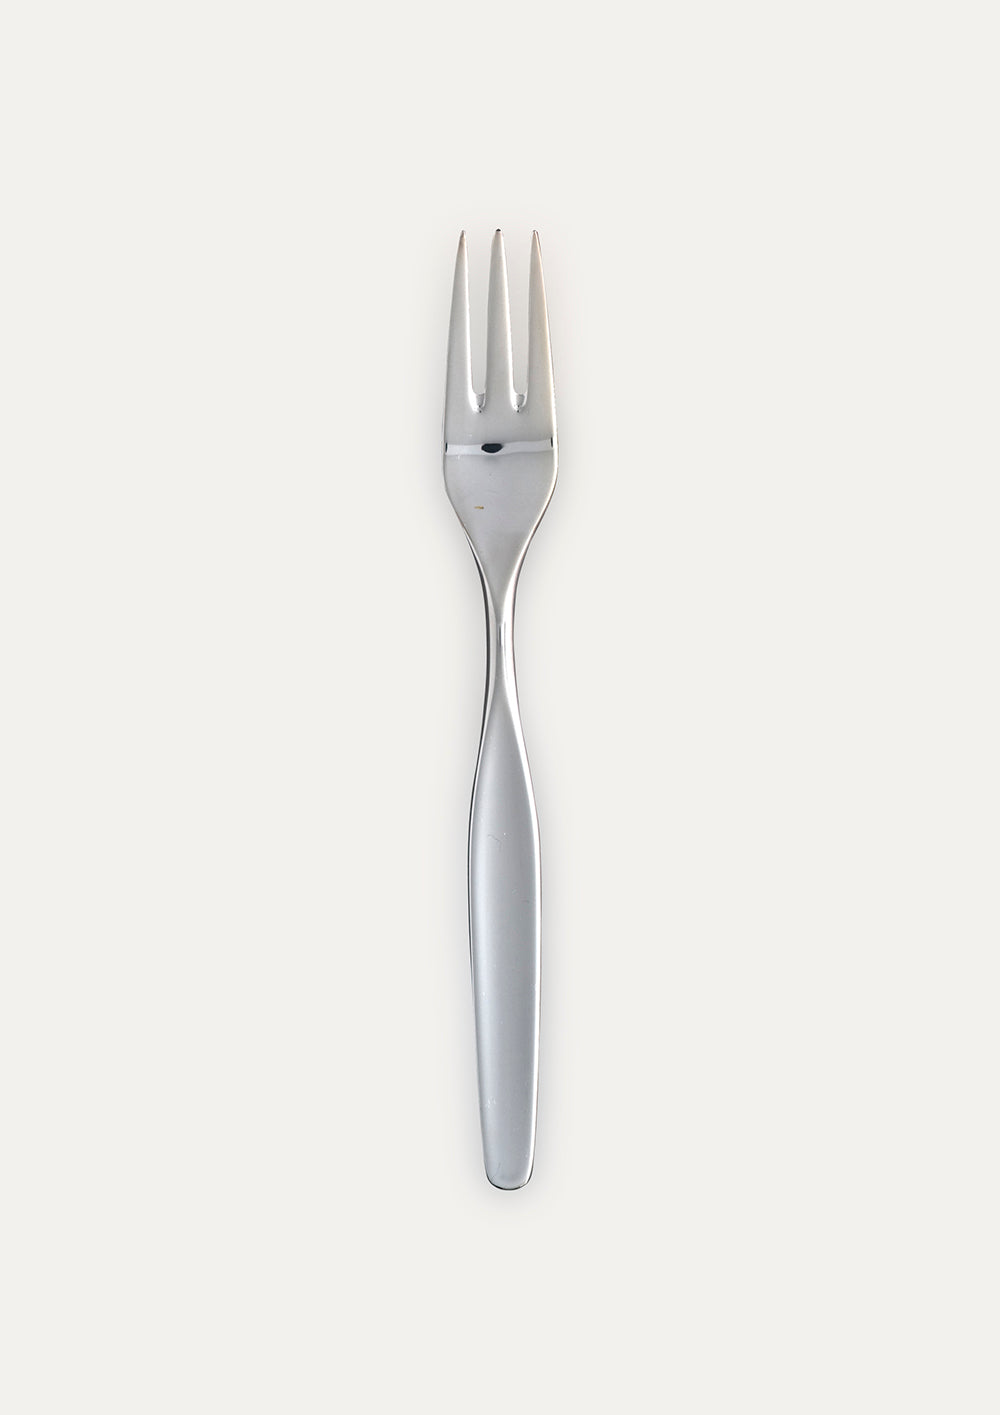 Aase children's fork